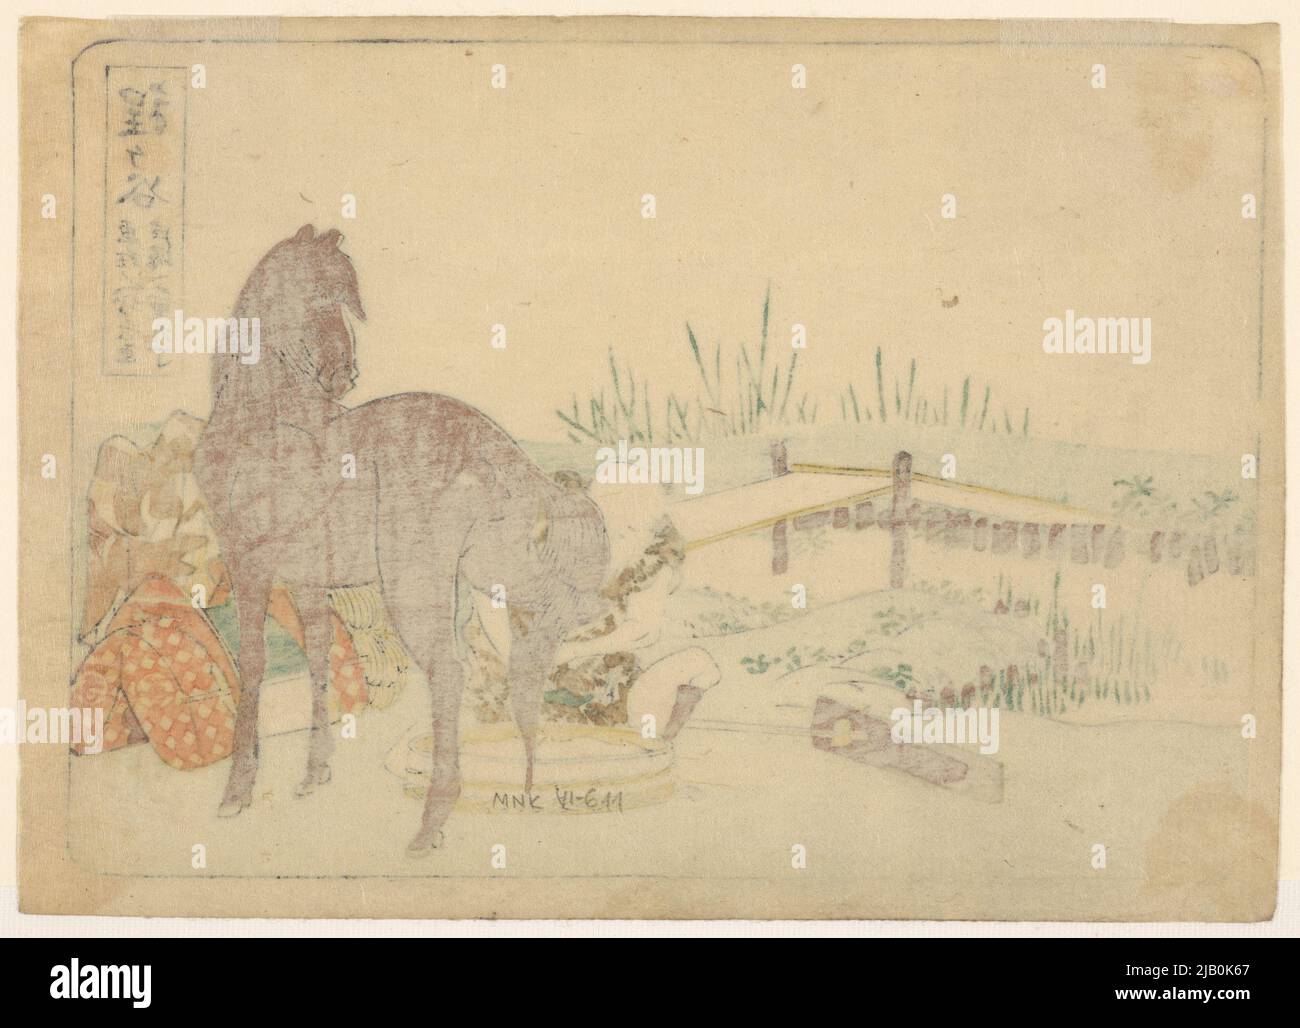 Un MMAN lavando un caballo. Hodogaya, de la serie: Cincuenta y tres paradas en la autopista Tokaido /Tokaido gojusan tsugi Katsushika, hokusai (1760 1849) Foto de stock